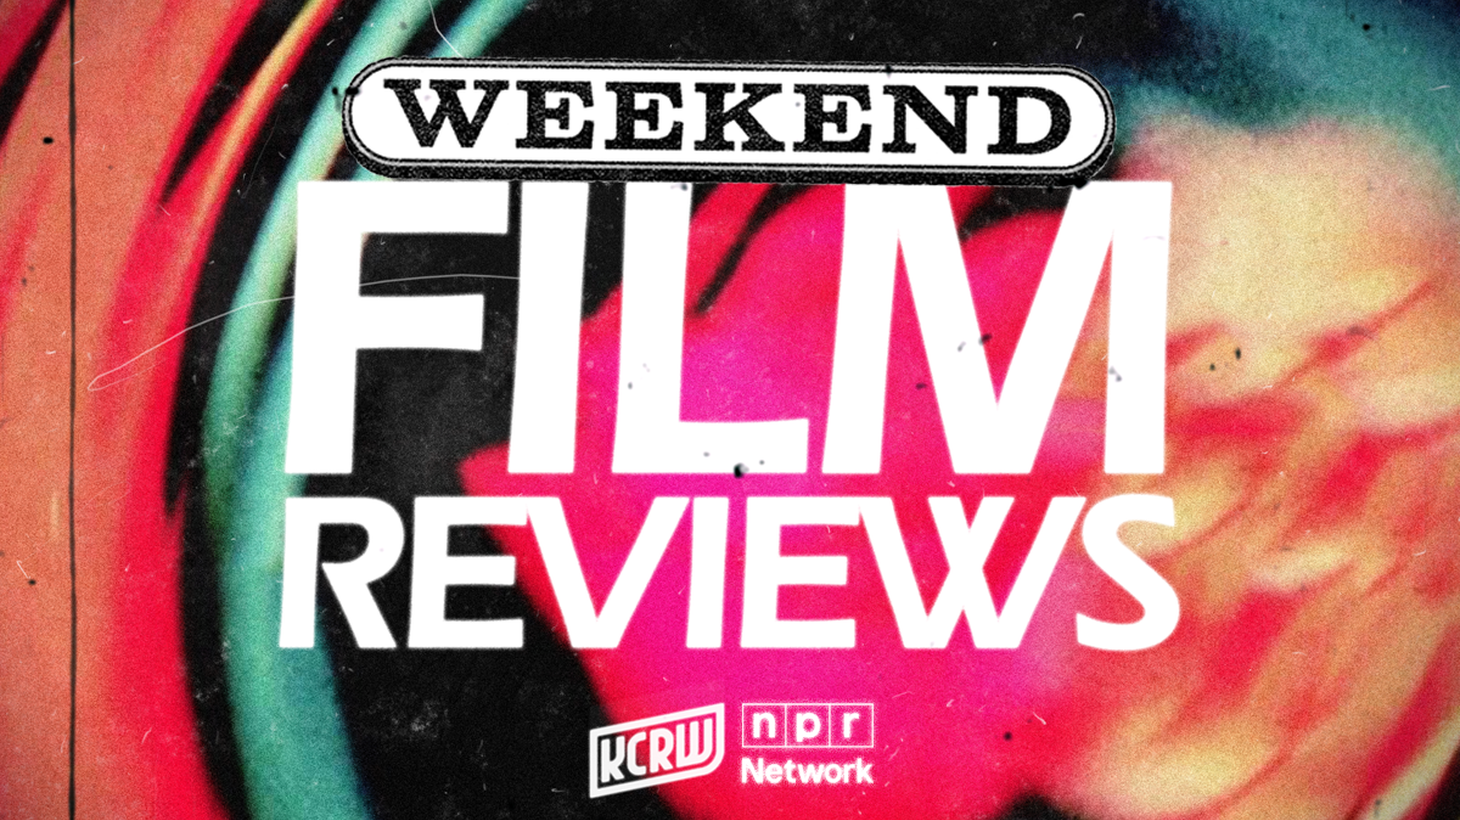 This week, Joe Morgenstern reviews this year's annual Telluride Film Festival.